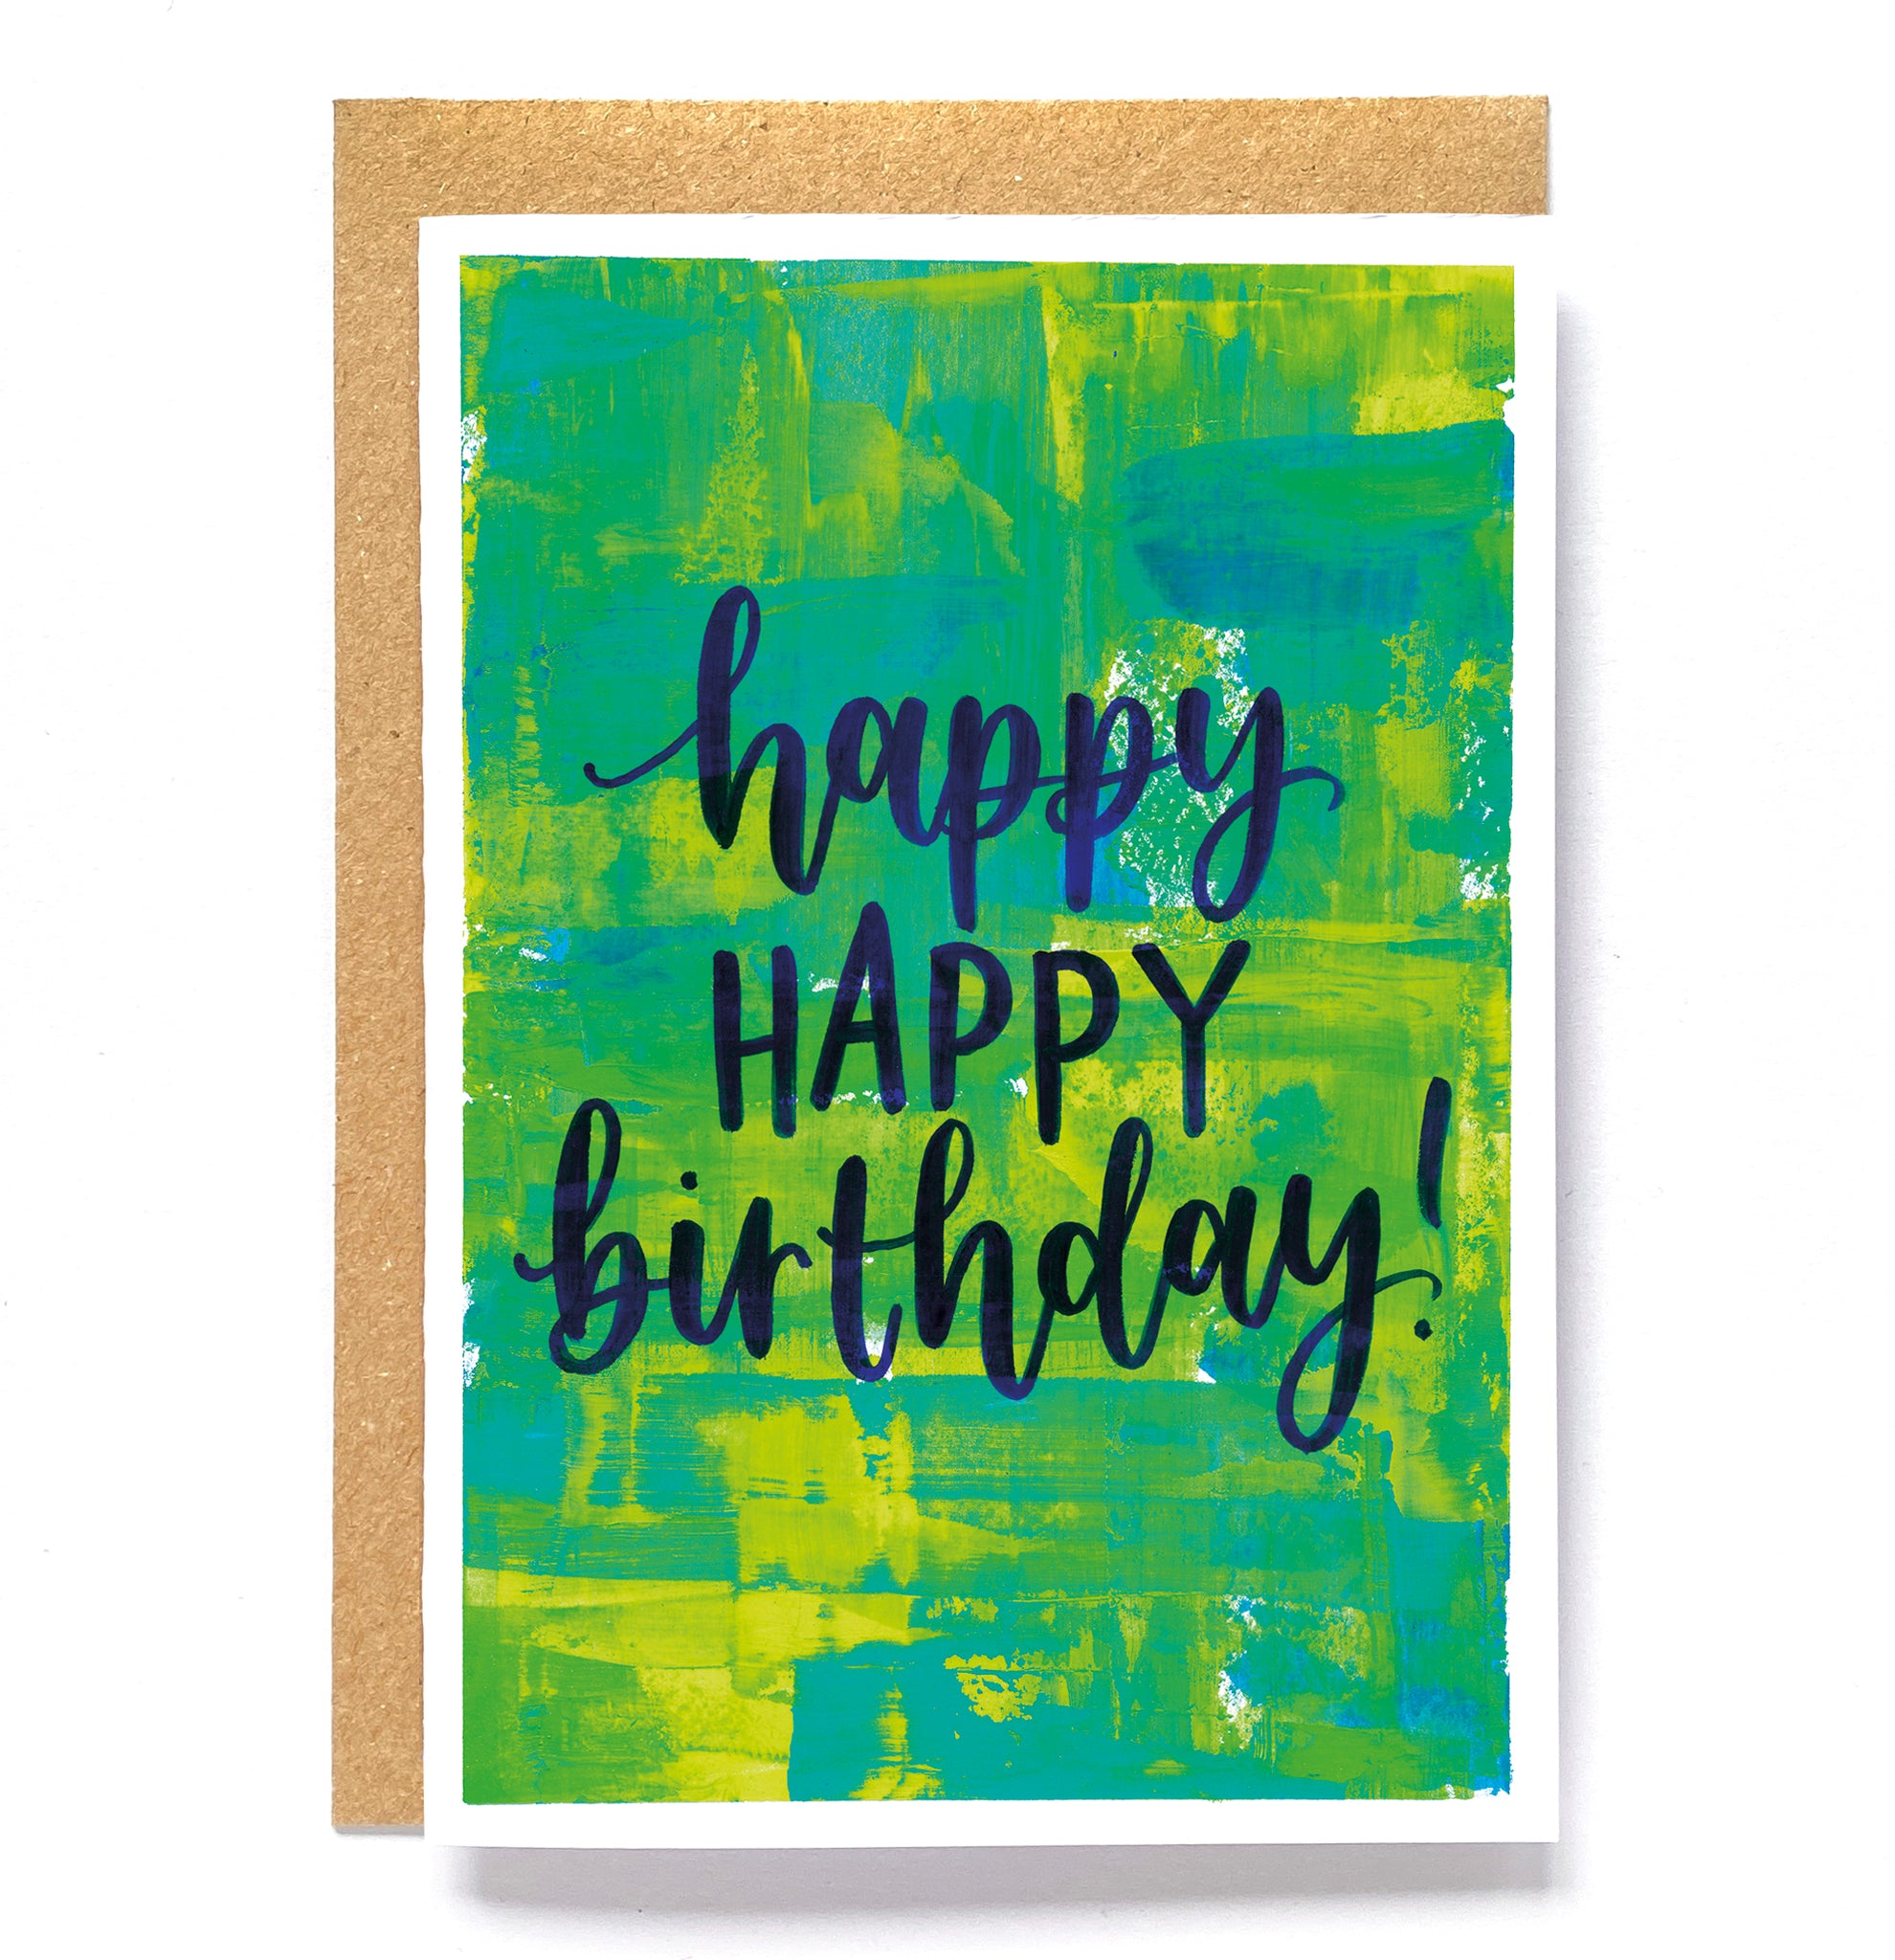 Colourful birthday card - 'Happy HAPPY birthday!'